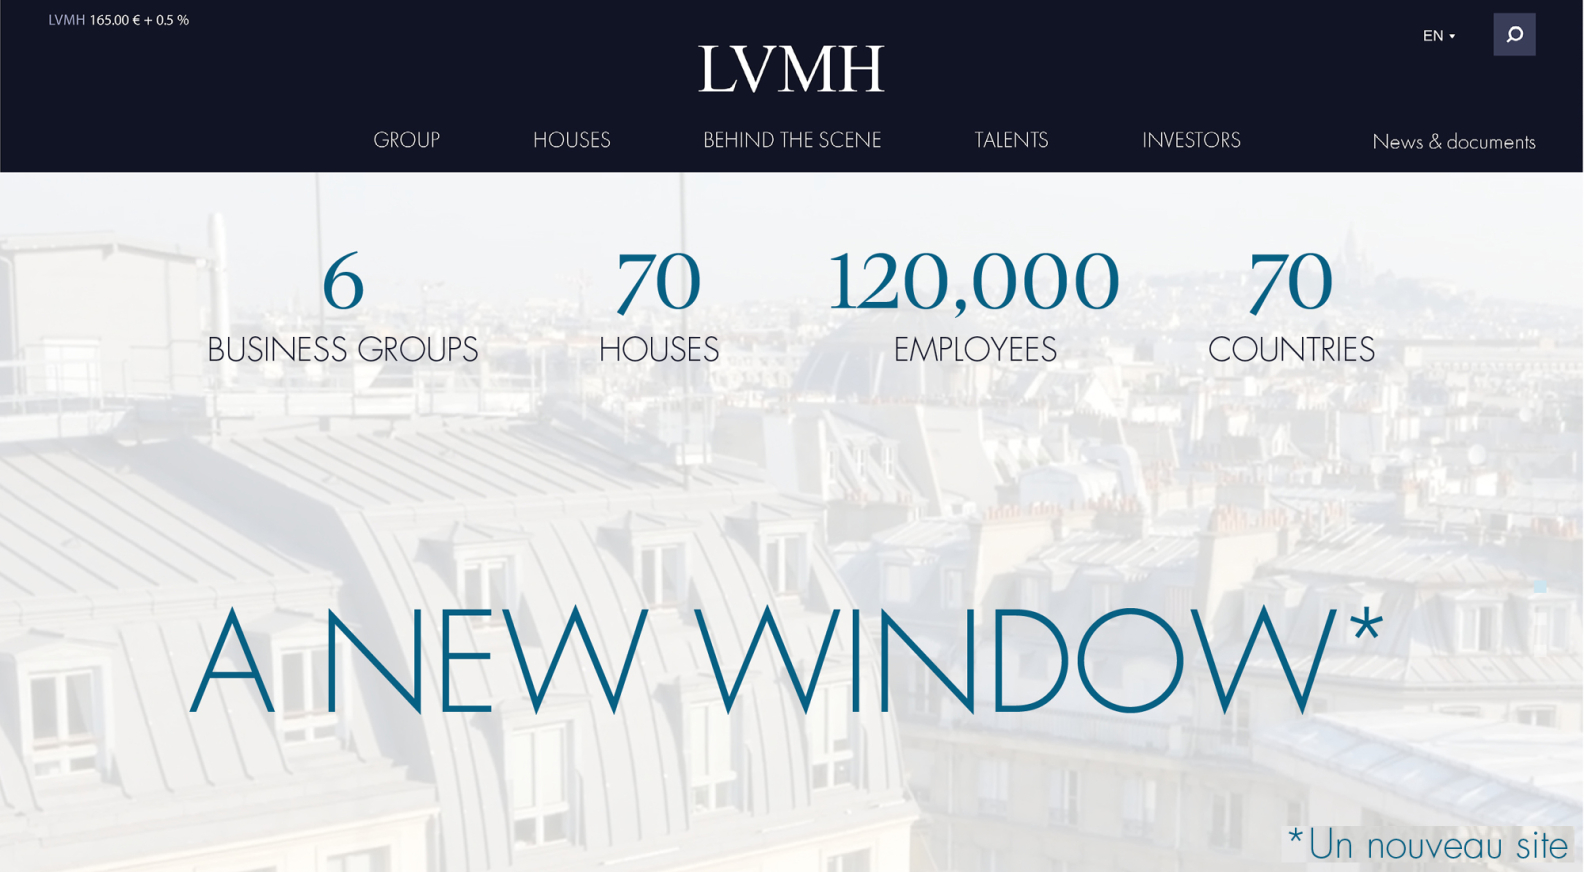 Individual shareholders - LVMH